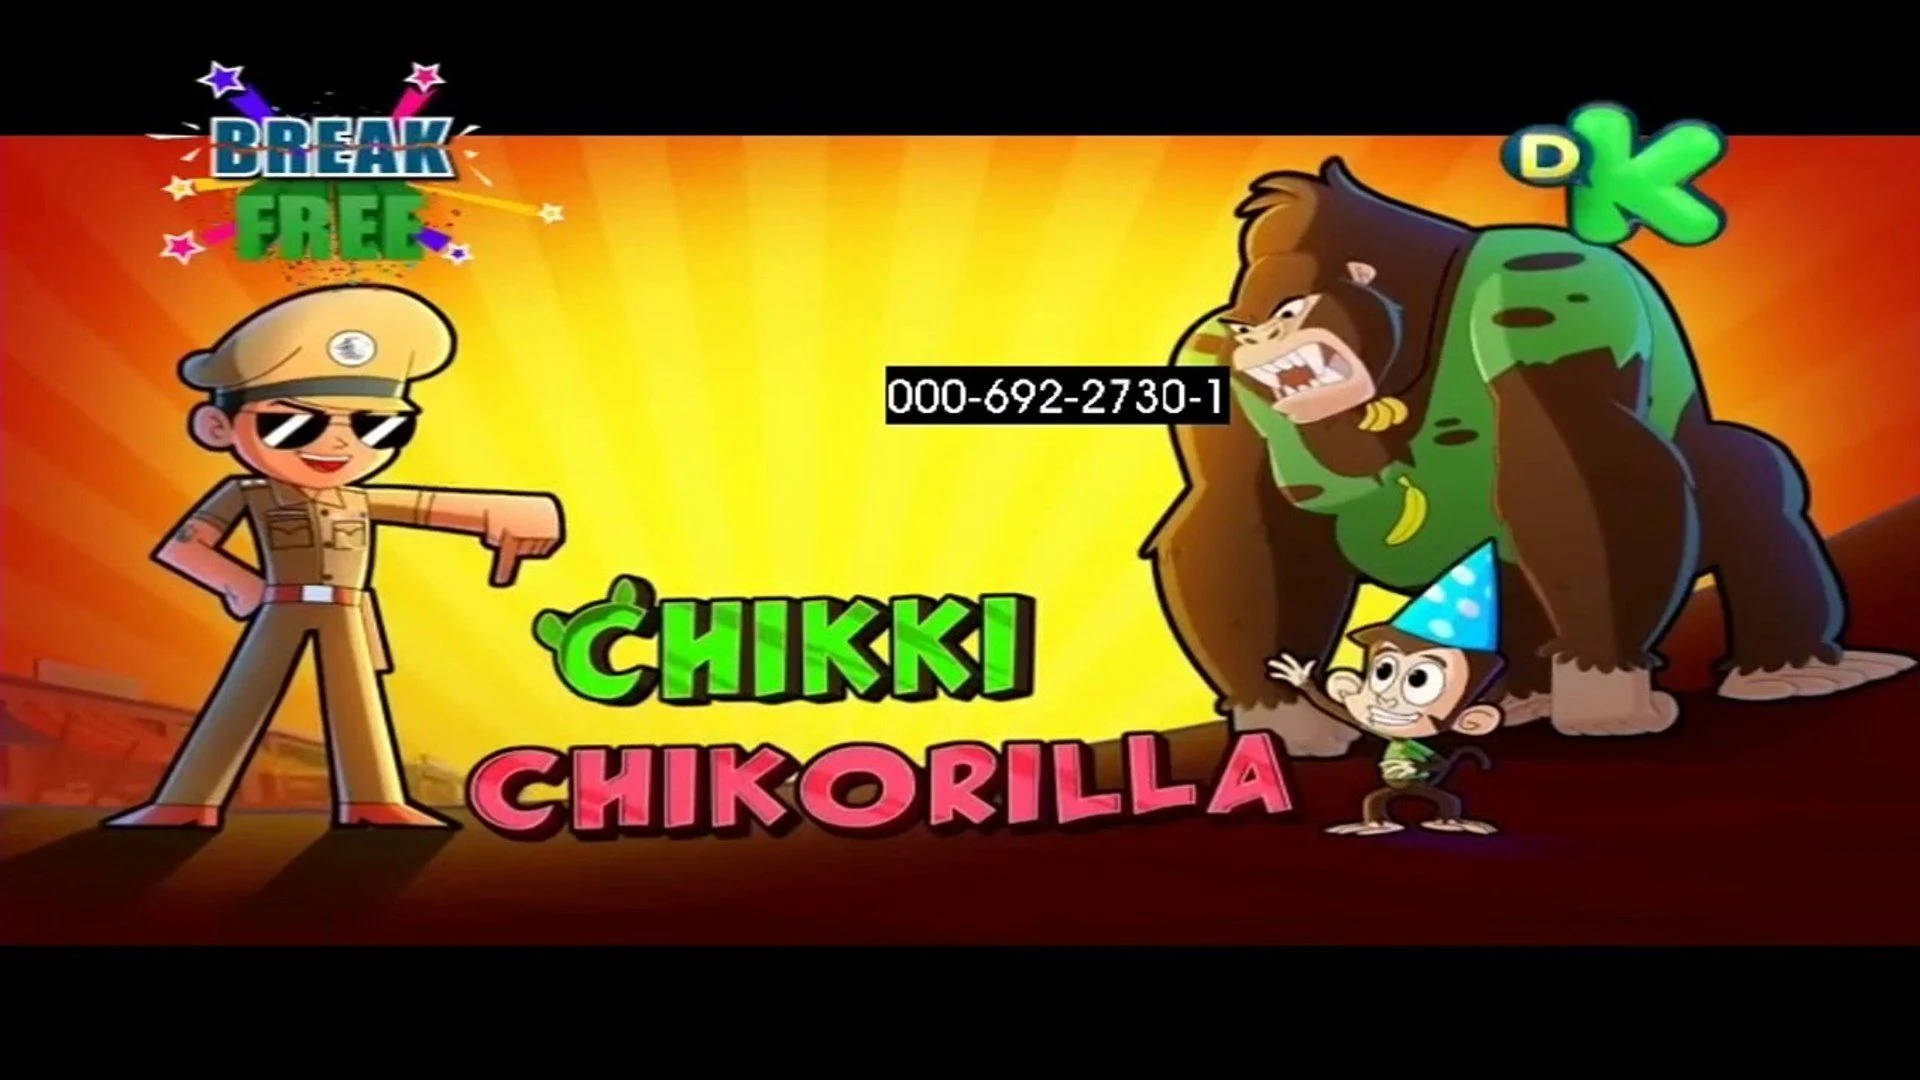 Little Singham And Chikki With A Gorilla Background